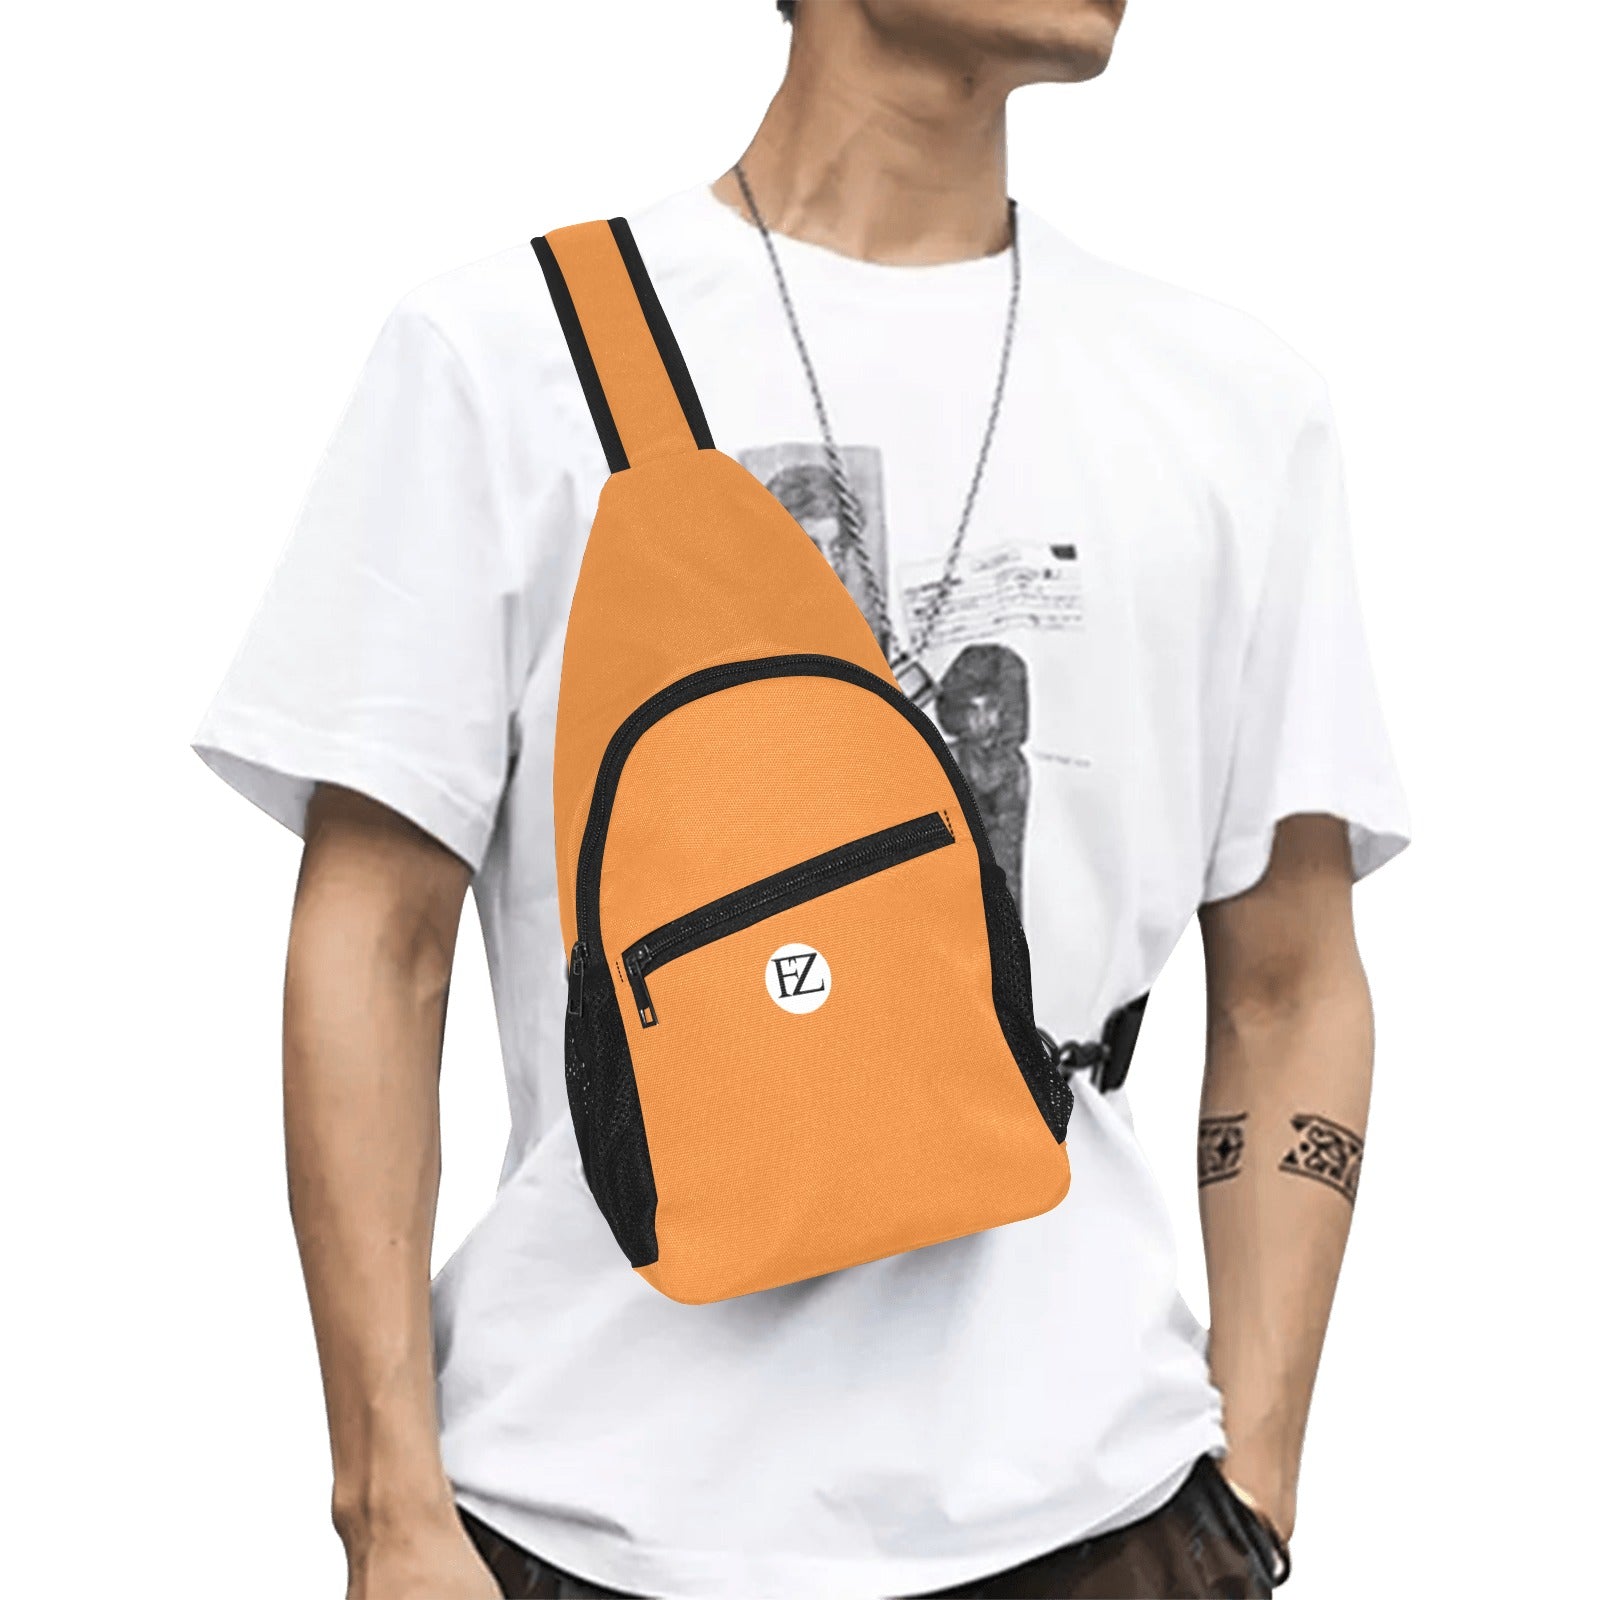 fz men's chest bag too one size / fz chest bag-orange all over print chest bag(model1719)